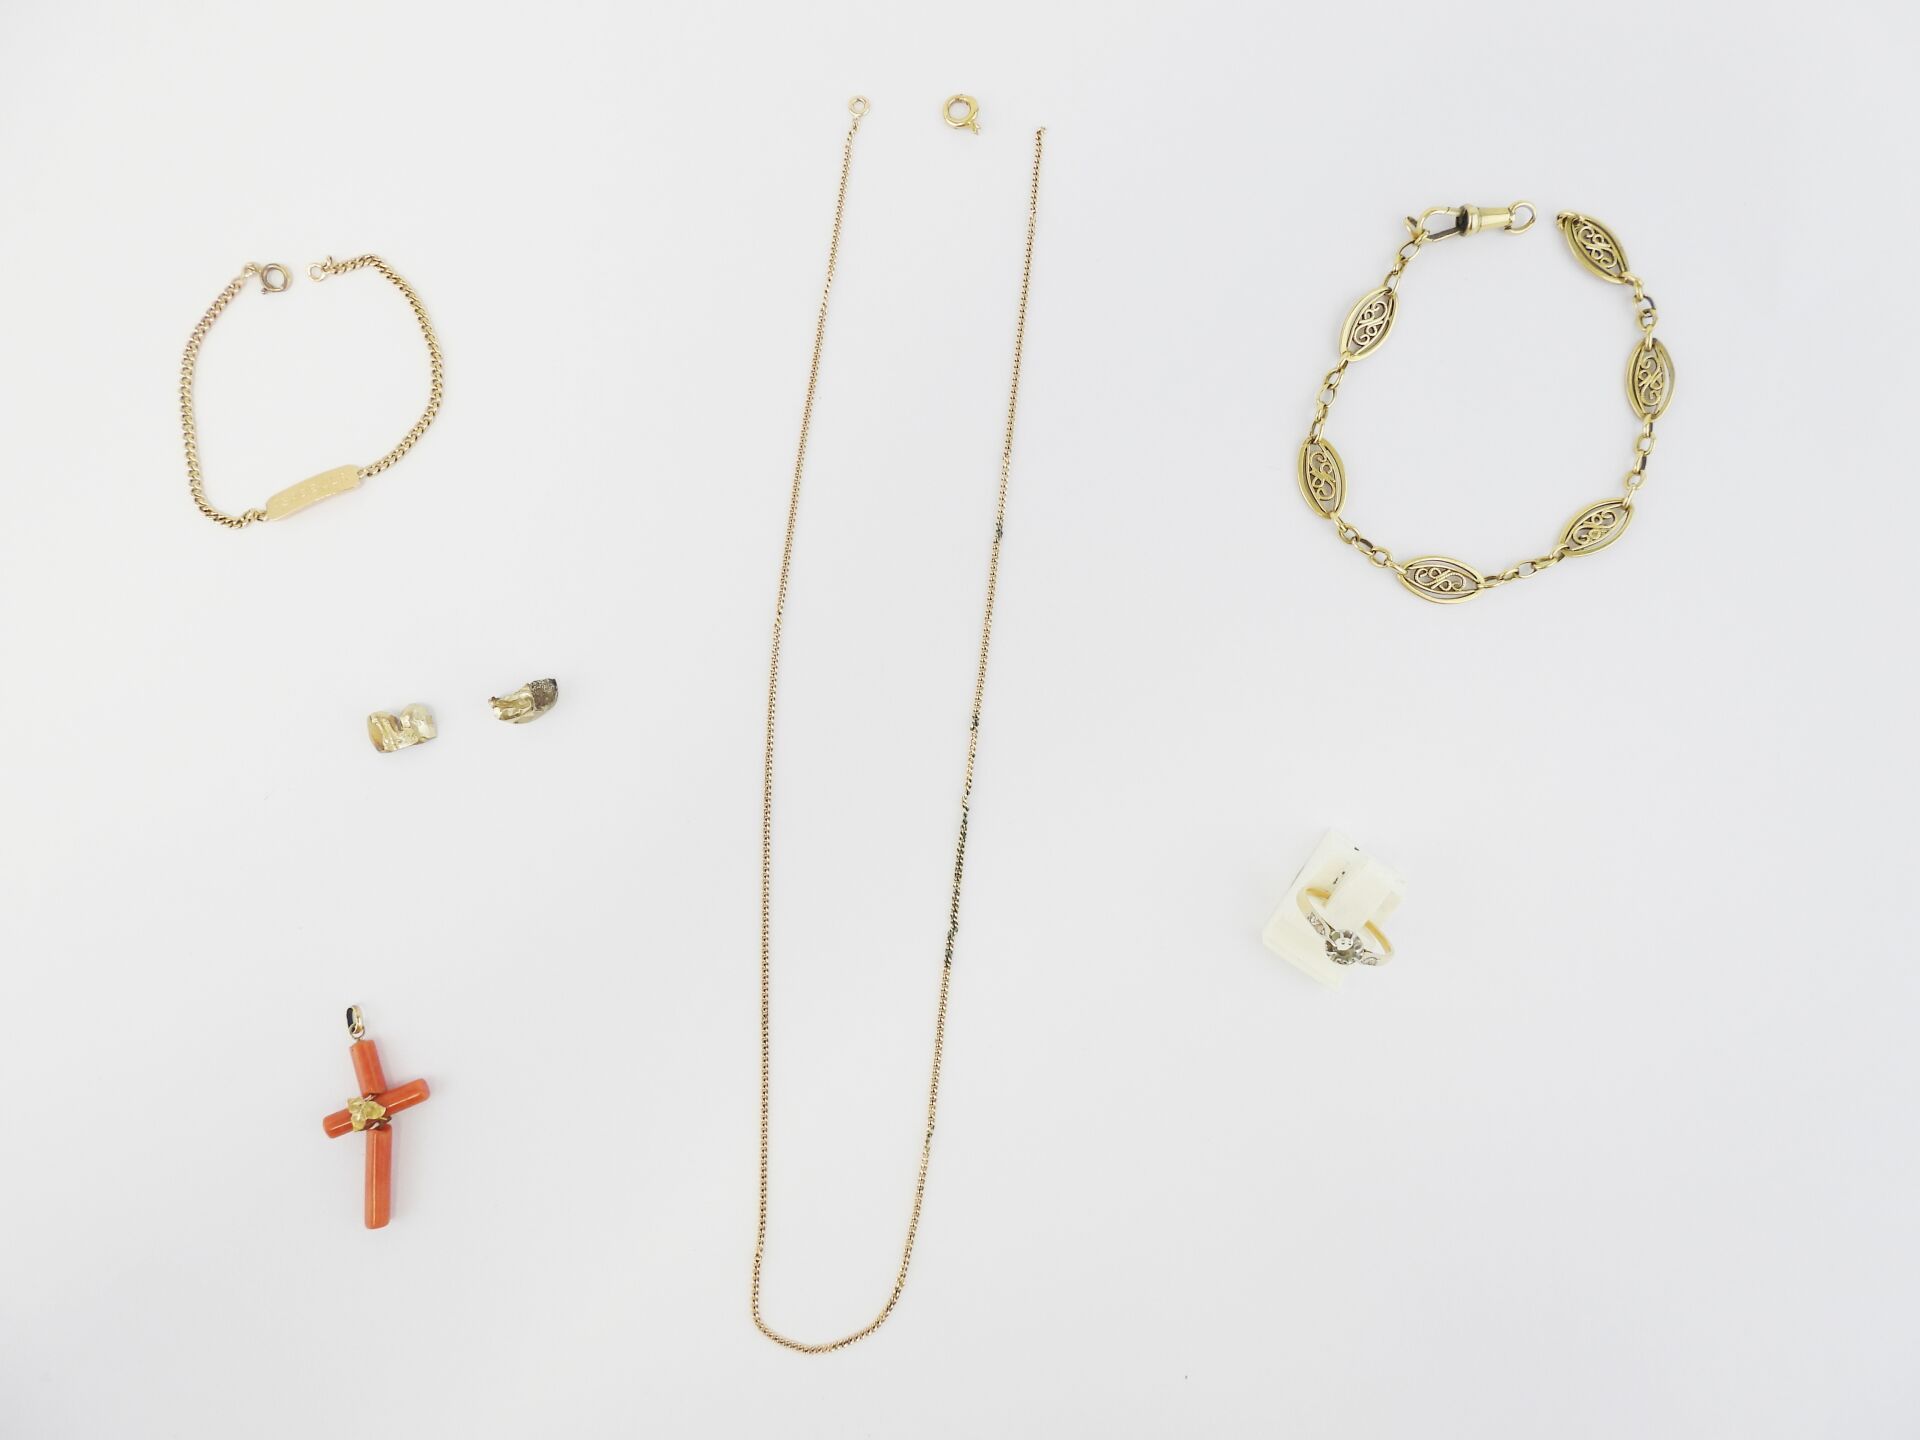 Null 杂项残片，包括十字架，牙科金，2个手镯，1个戒指。21.95克（其中20.12克不包括金和珊瑚十字架）